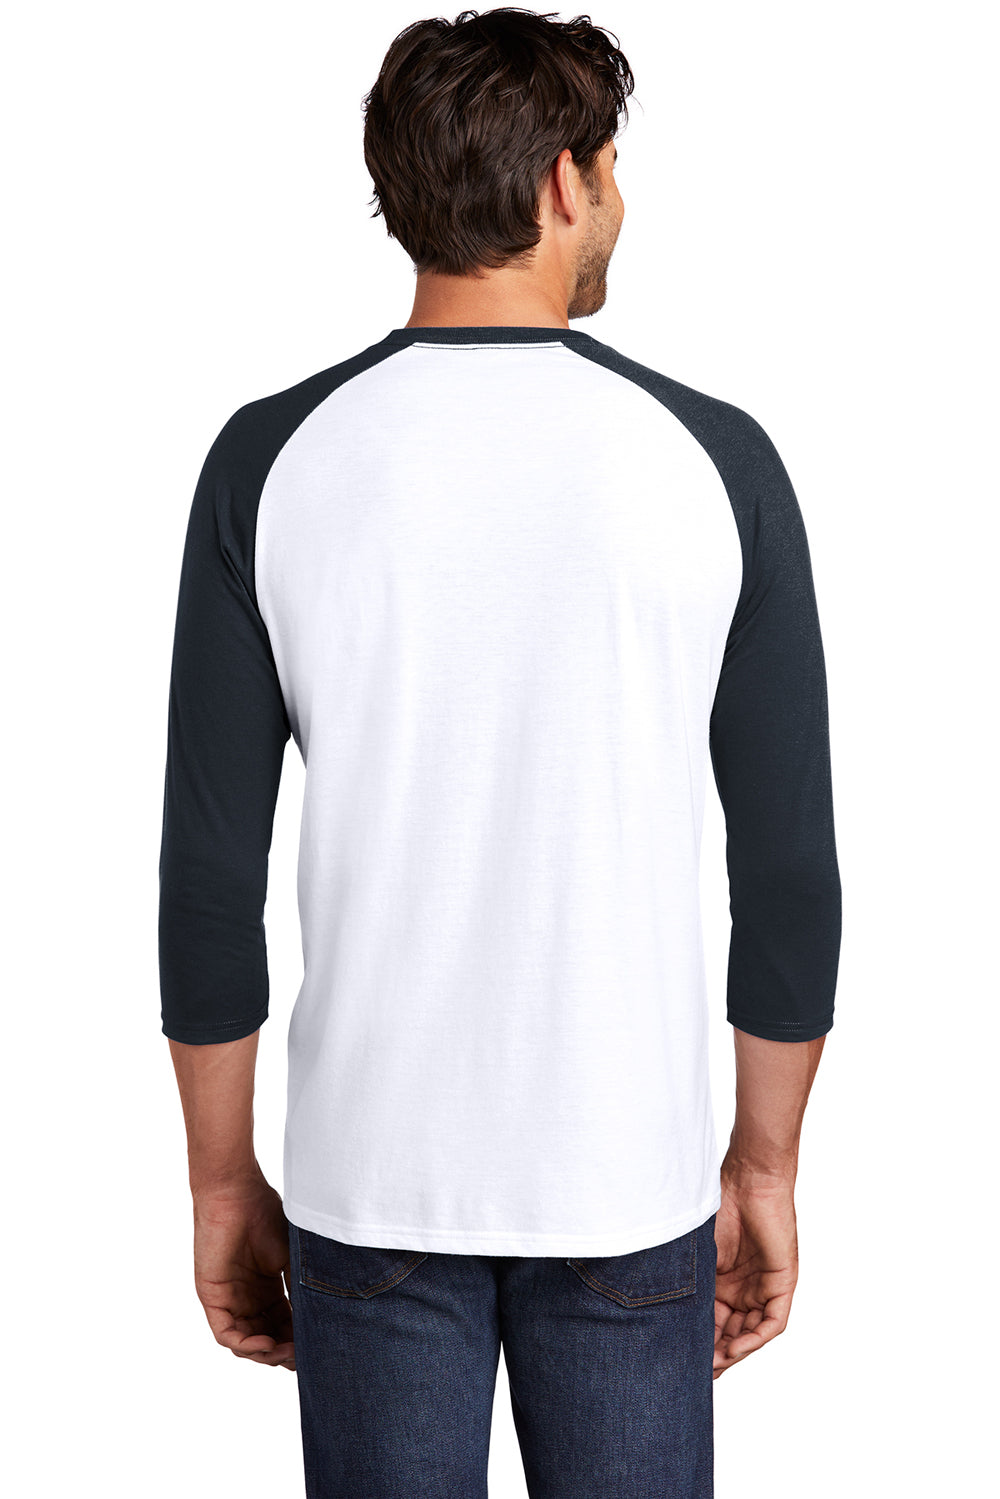 District DM136 Mens Perfect Tri 3/4 Sleeve Crewneck T-Shirt White/New Navy Blue Back